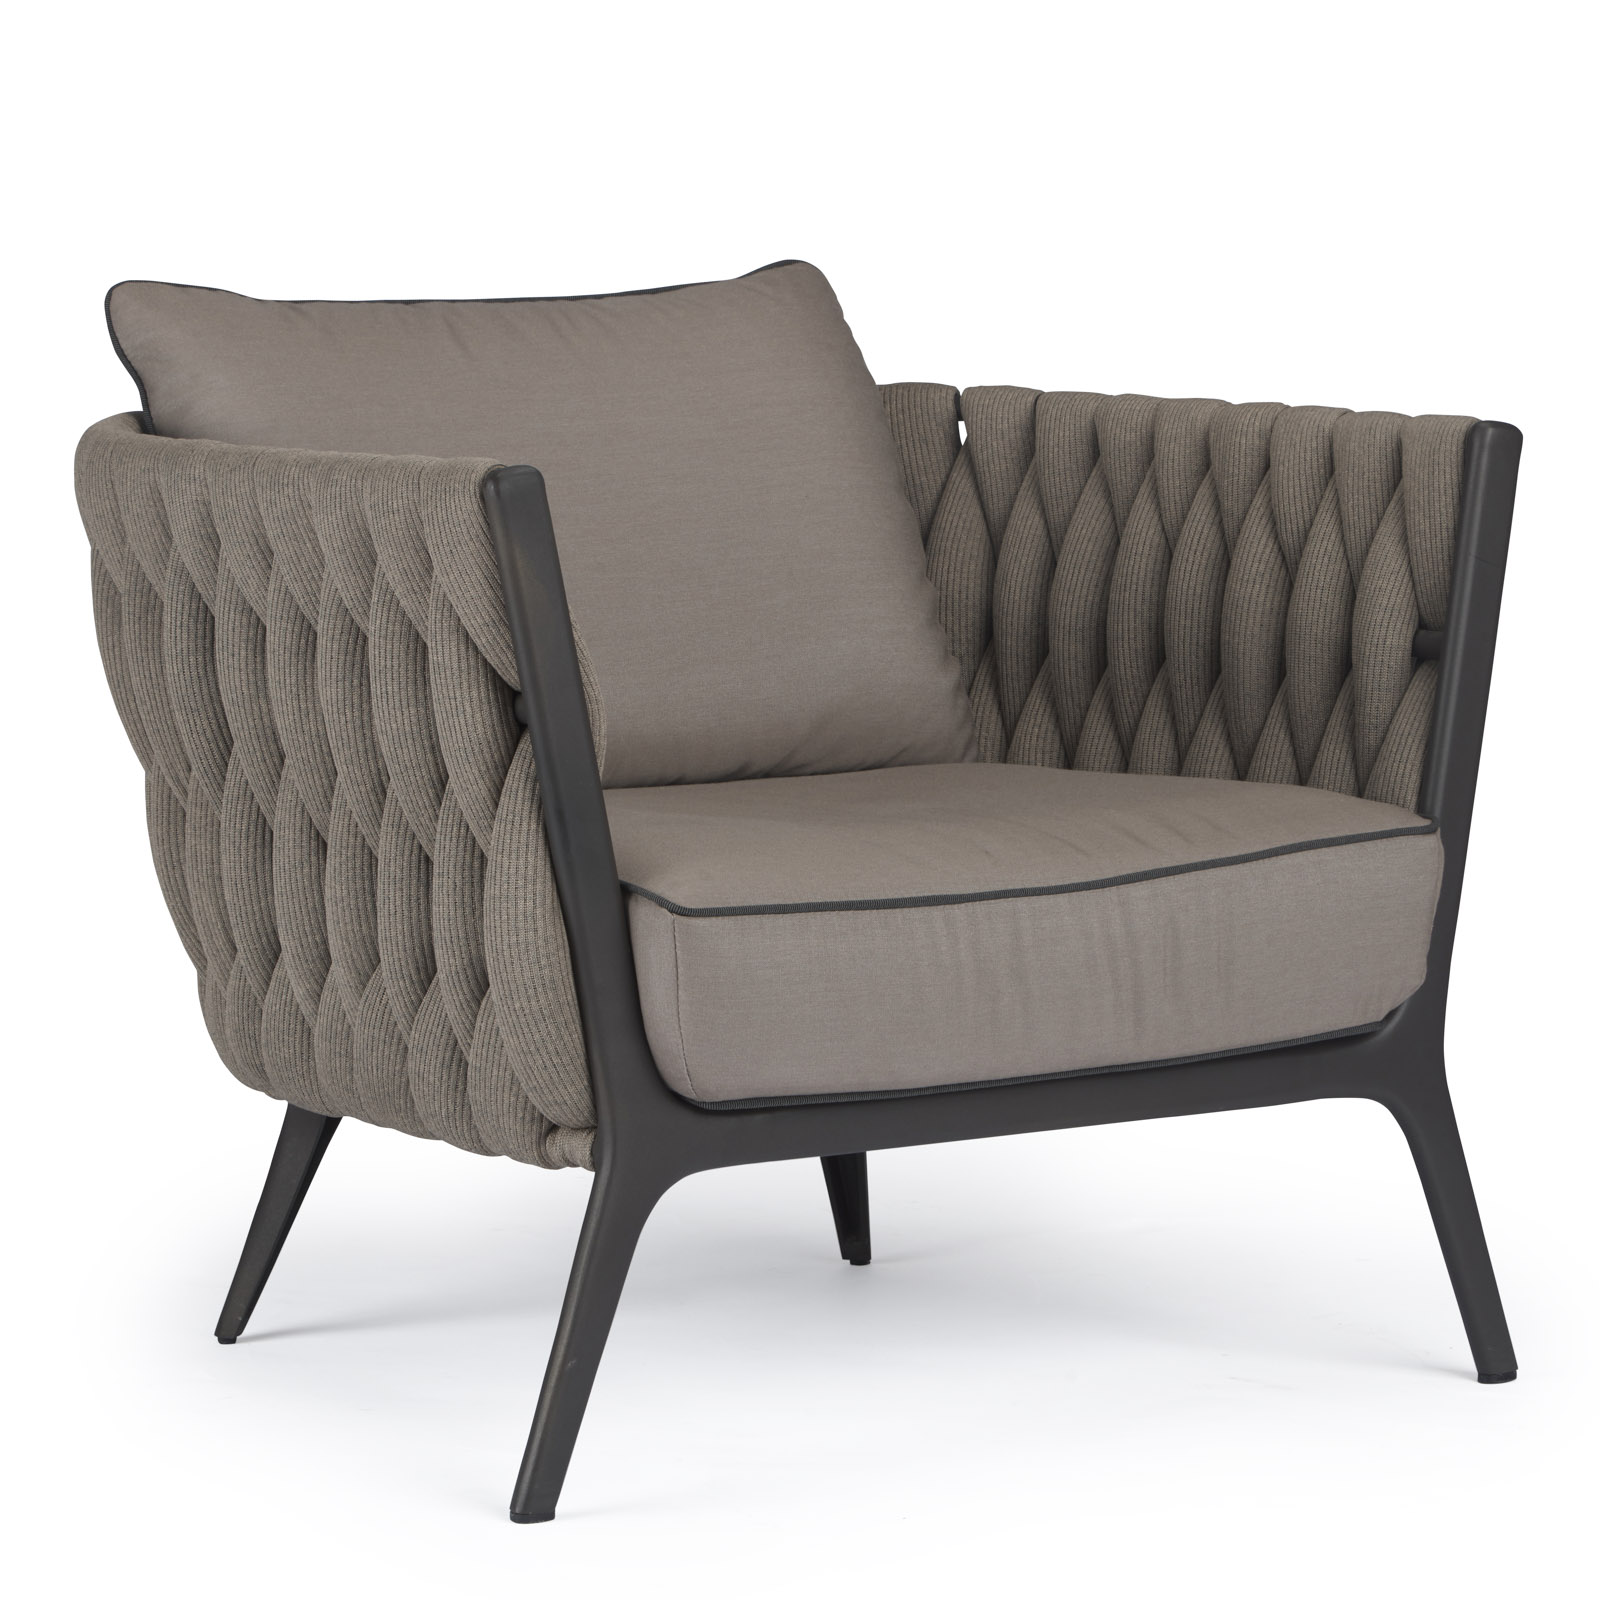 Bianca Outdoor Rope Club Chair| Patio Lounge Furniture | Teak